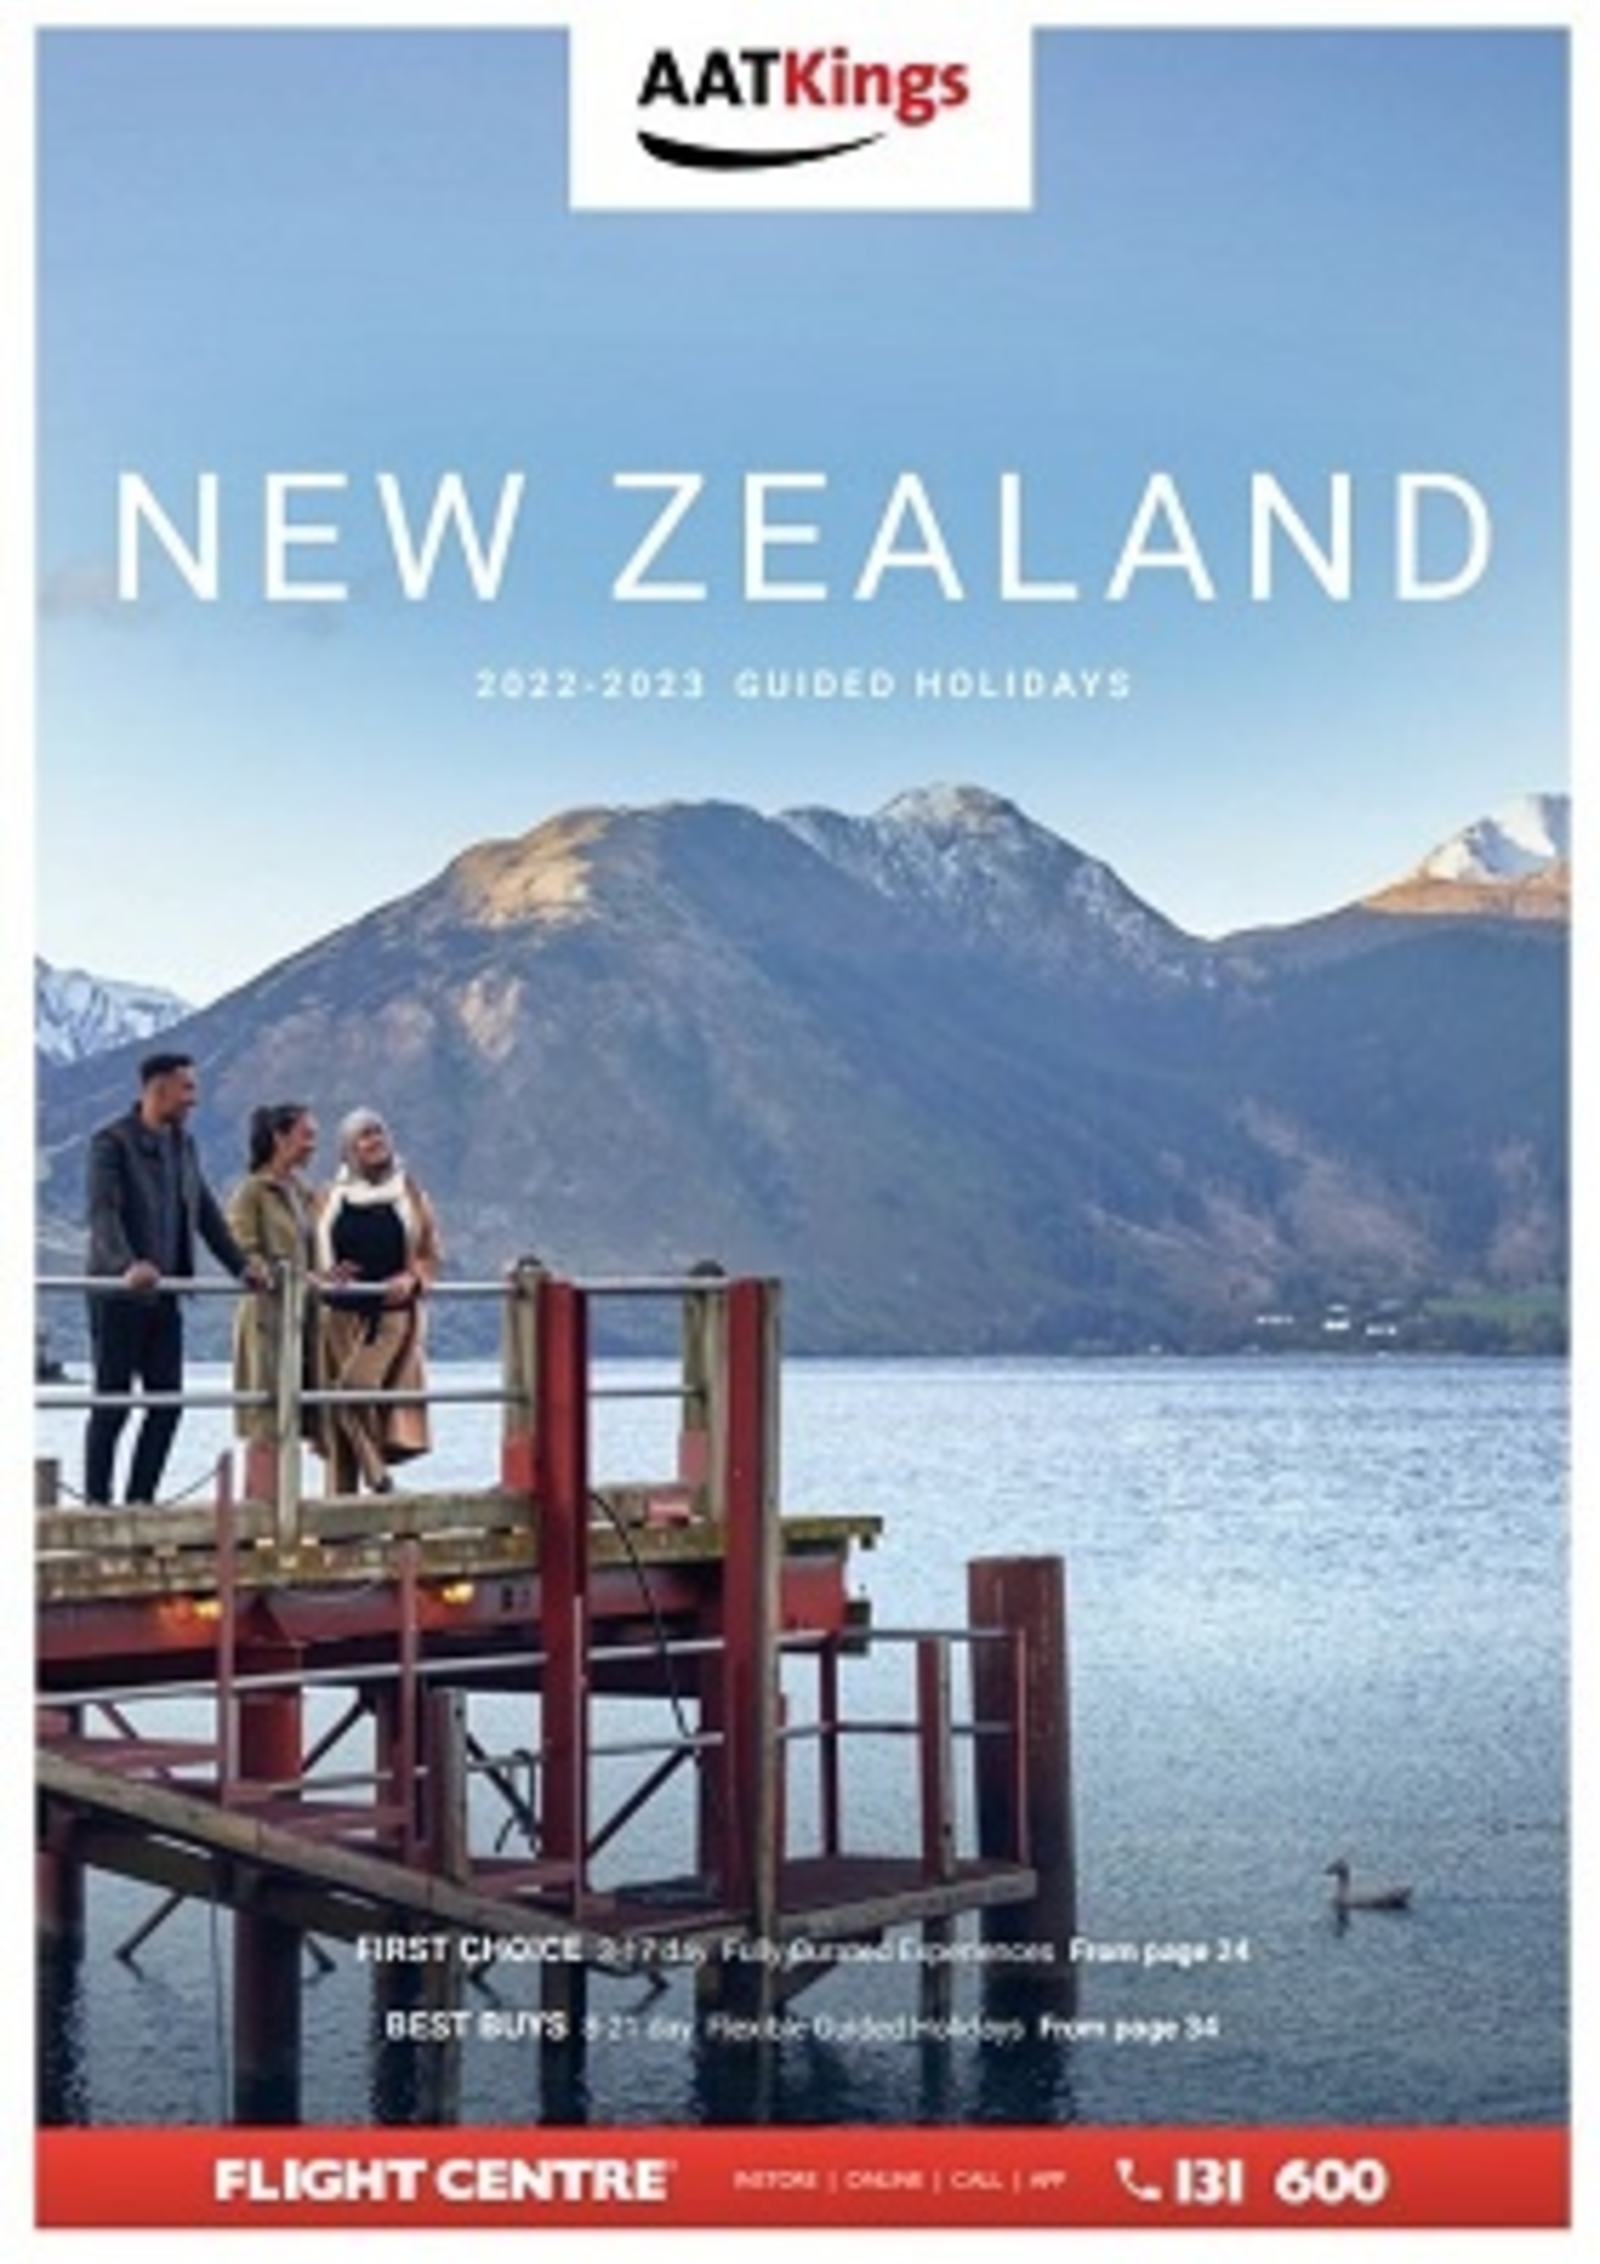 AAT NZ Brochure Tile.JPG